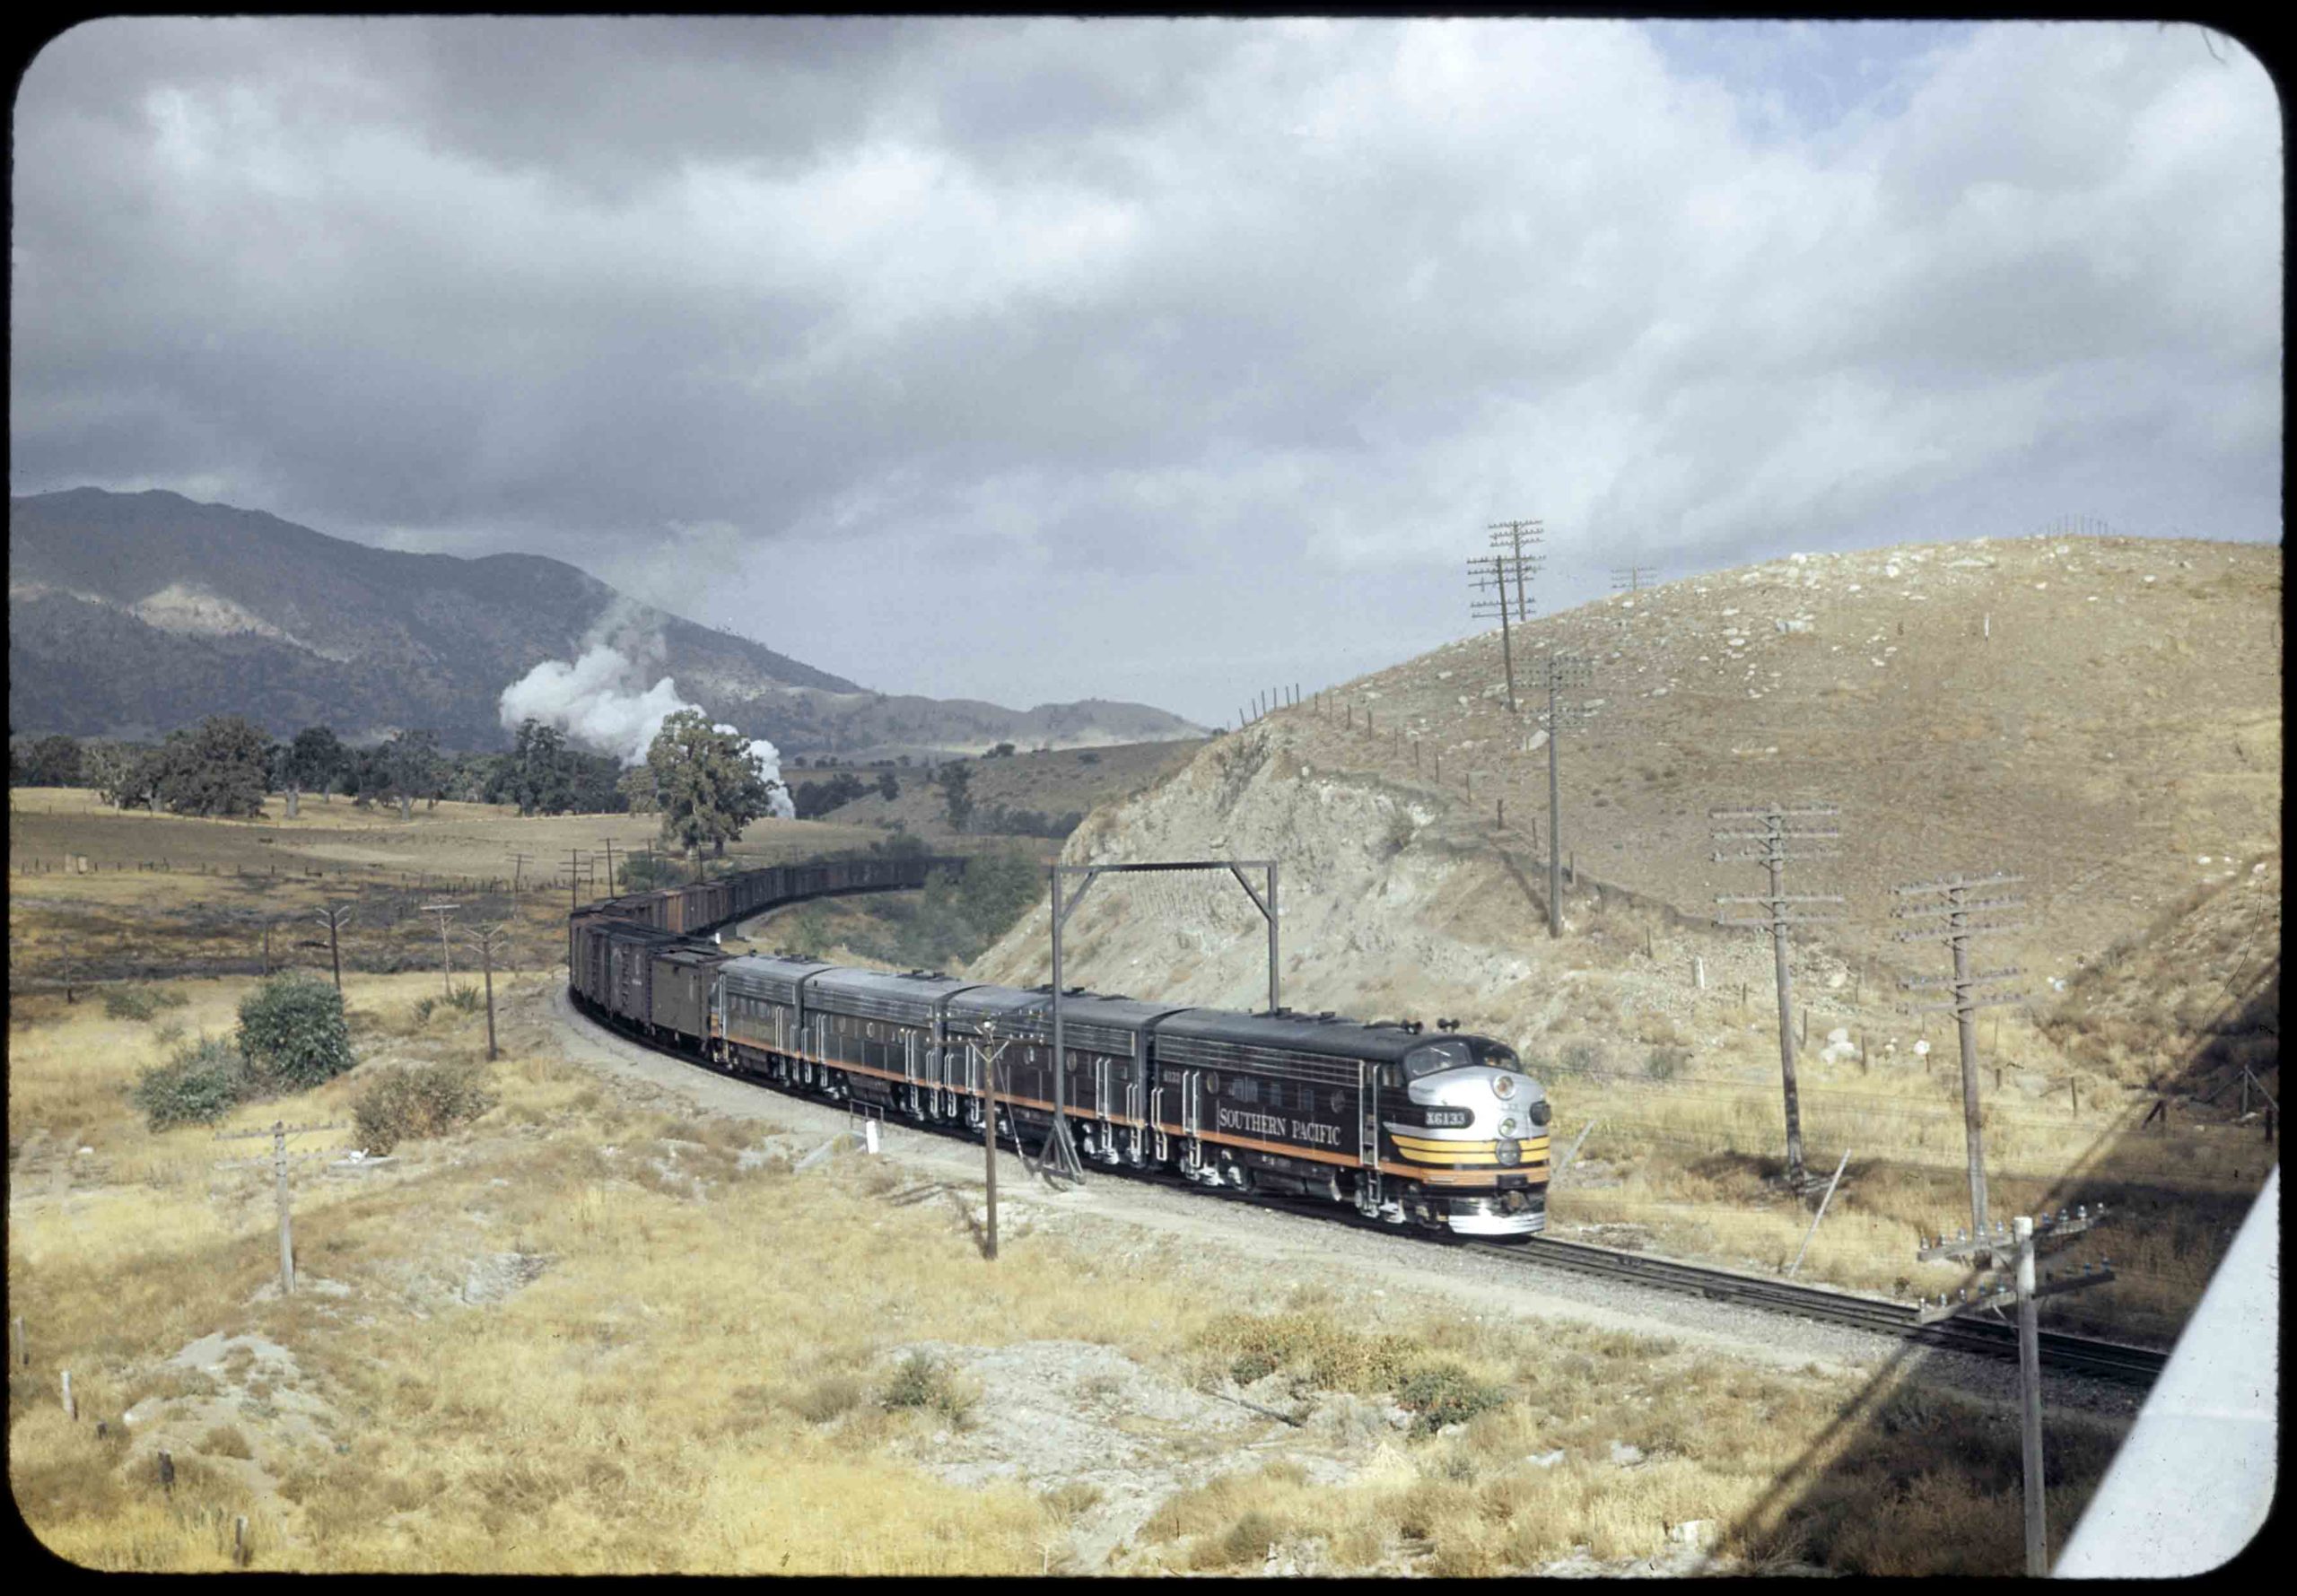 Freight train in an arid, mountainous landscape.